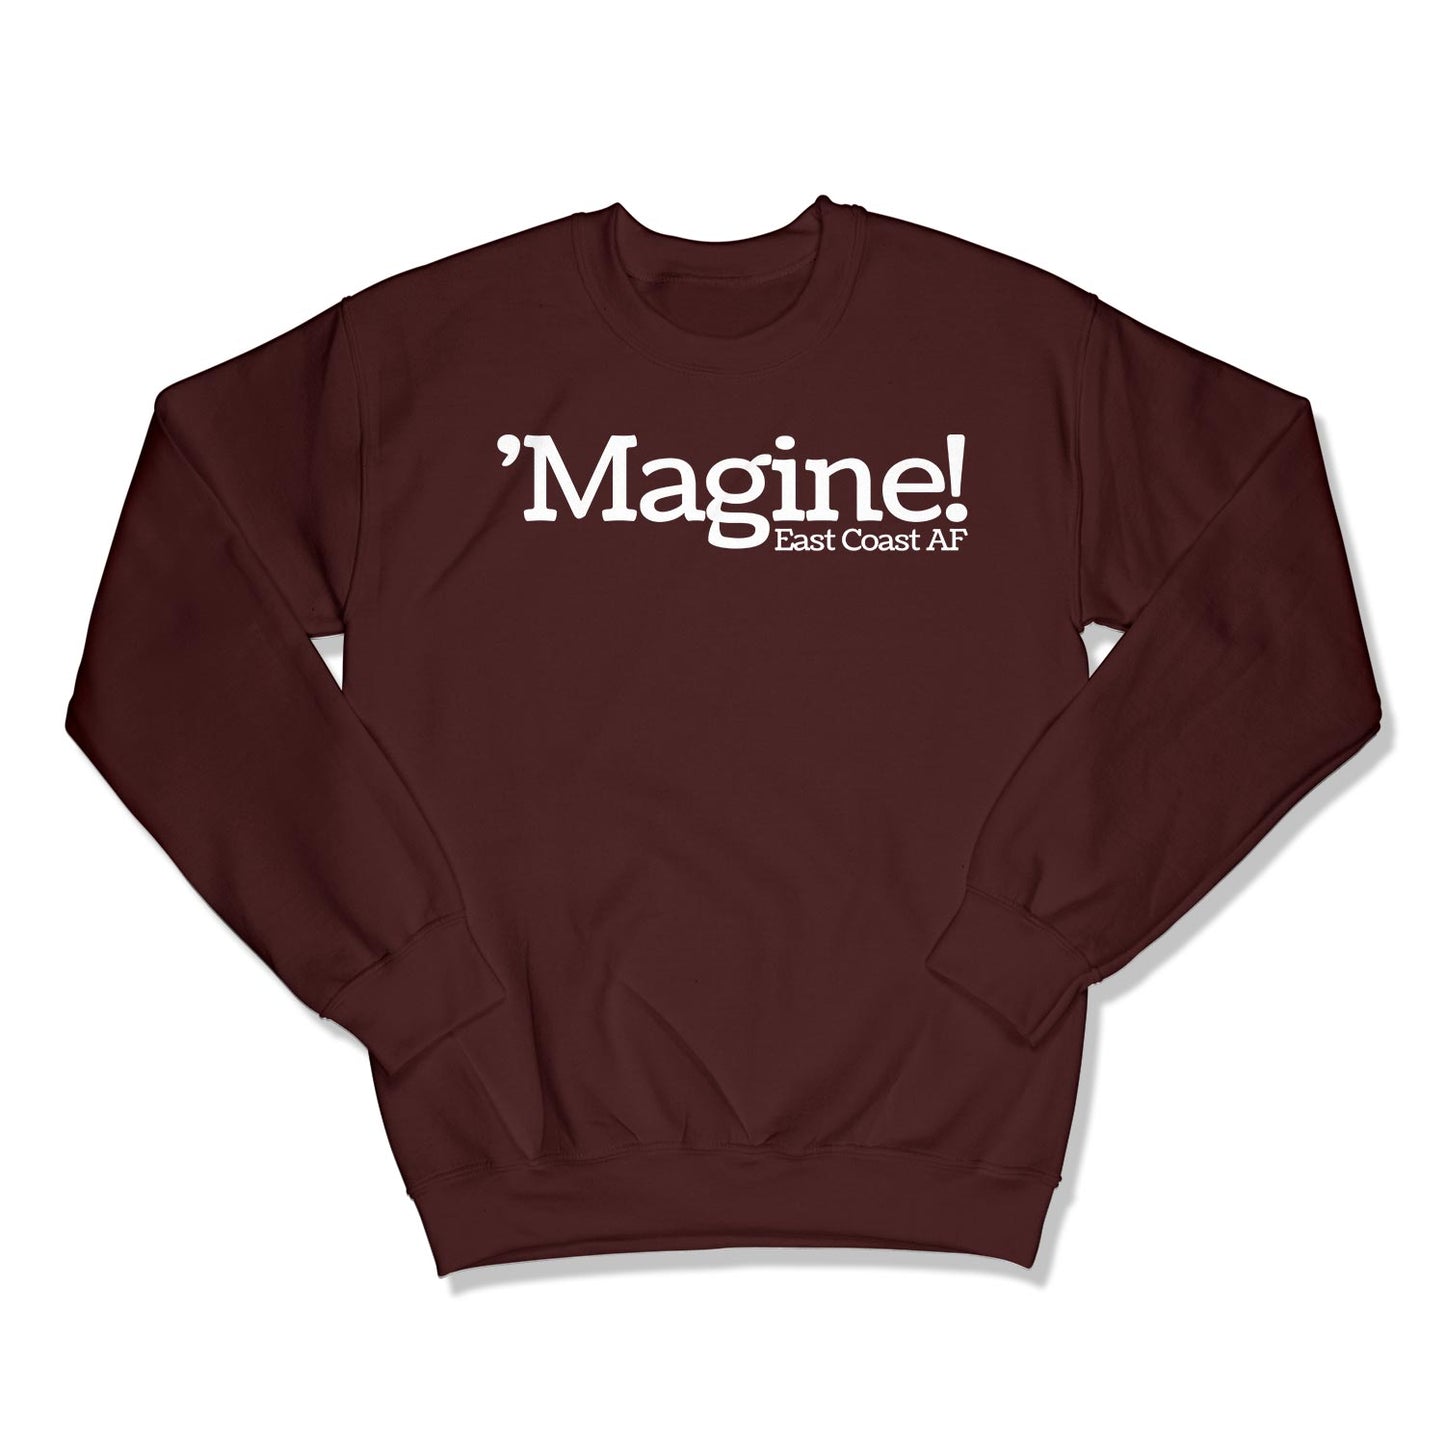 'Magine! Unisex Crewneck Sweatshirt in Color: Maroon - East Coast AF Apparel